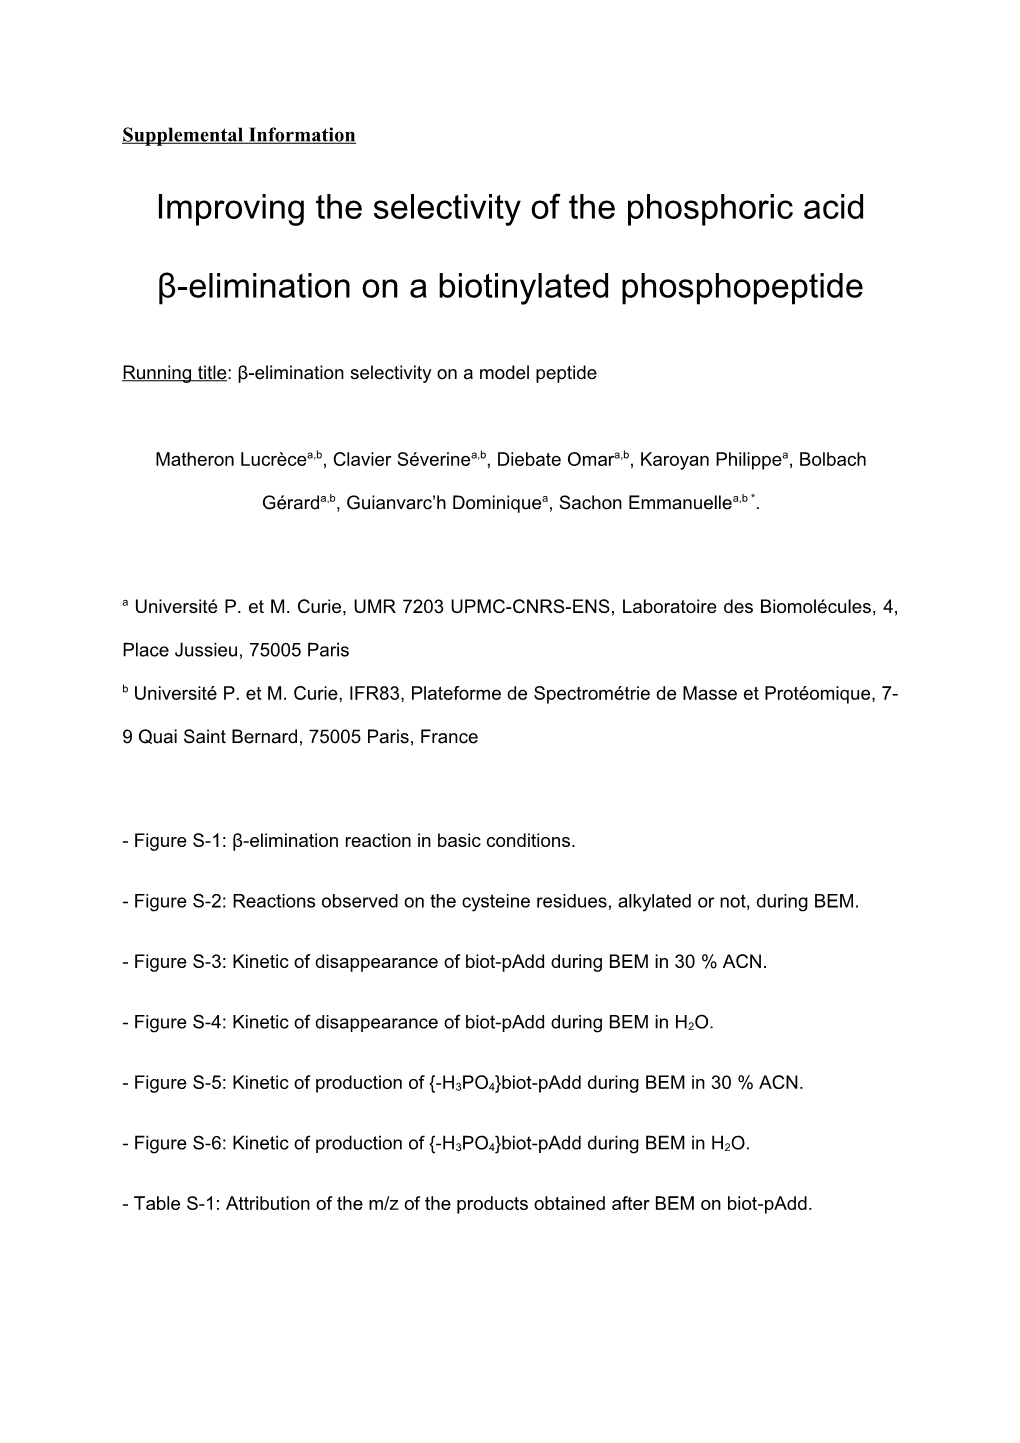 Improving the Selectivity of the Phosphoric Acid Βelimination on a Biotinylated Phosphopeptide